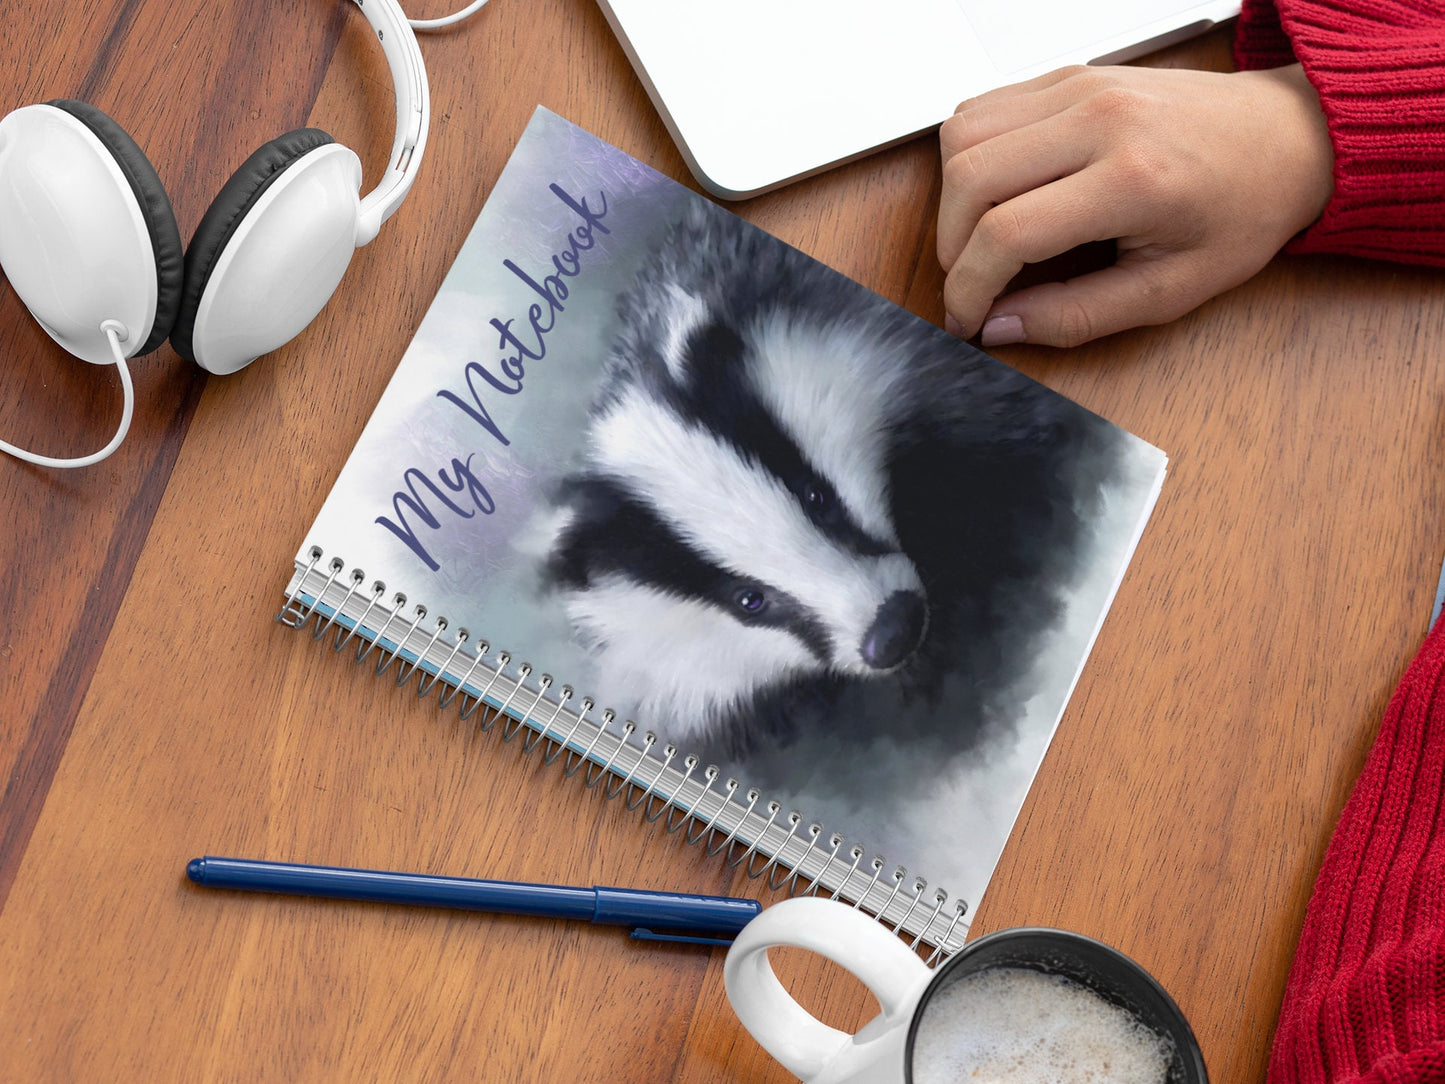 British Wildlife Art Badger Notebook Gift Idea for Christmas